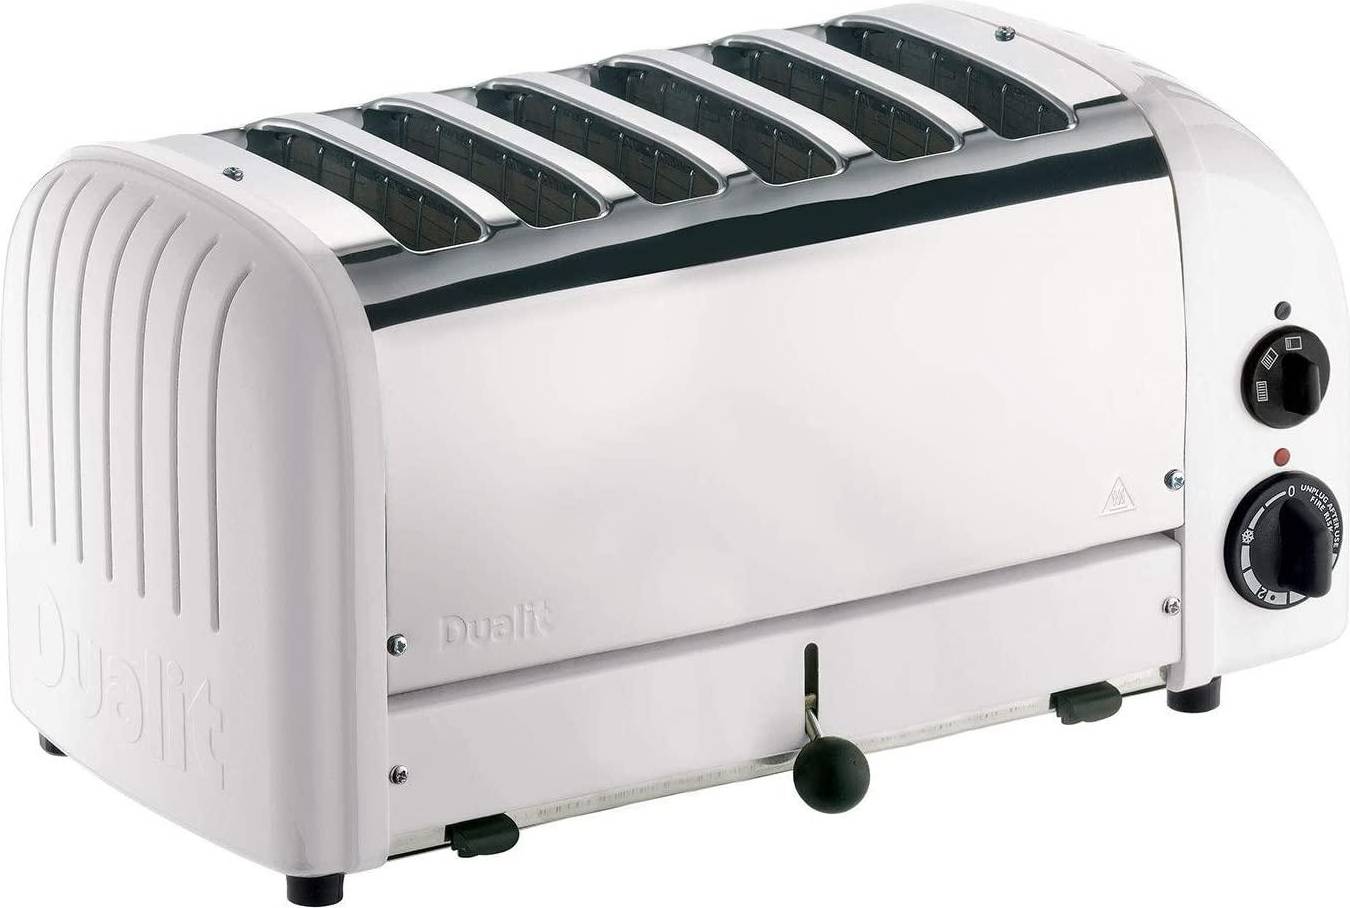 Dualit Classic Vario Aws Black 6 Slot Toaster 60145 for sale online 